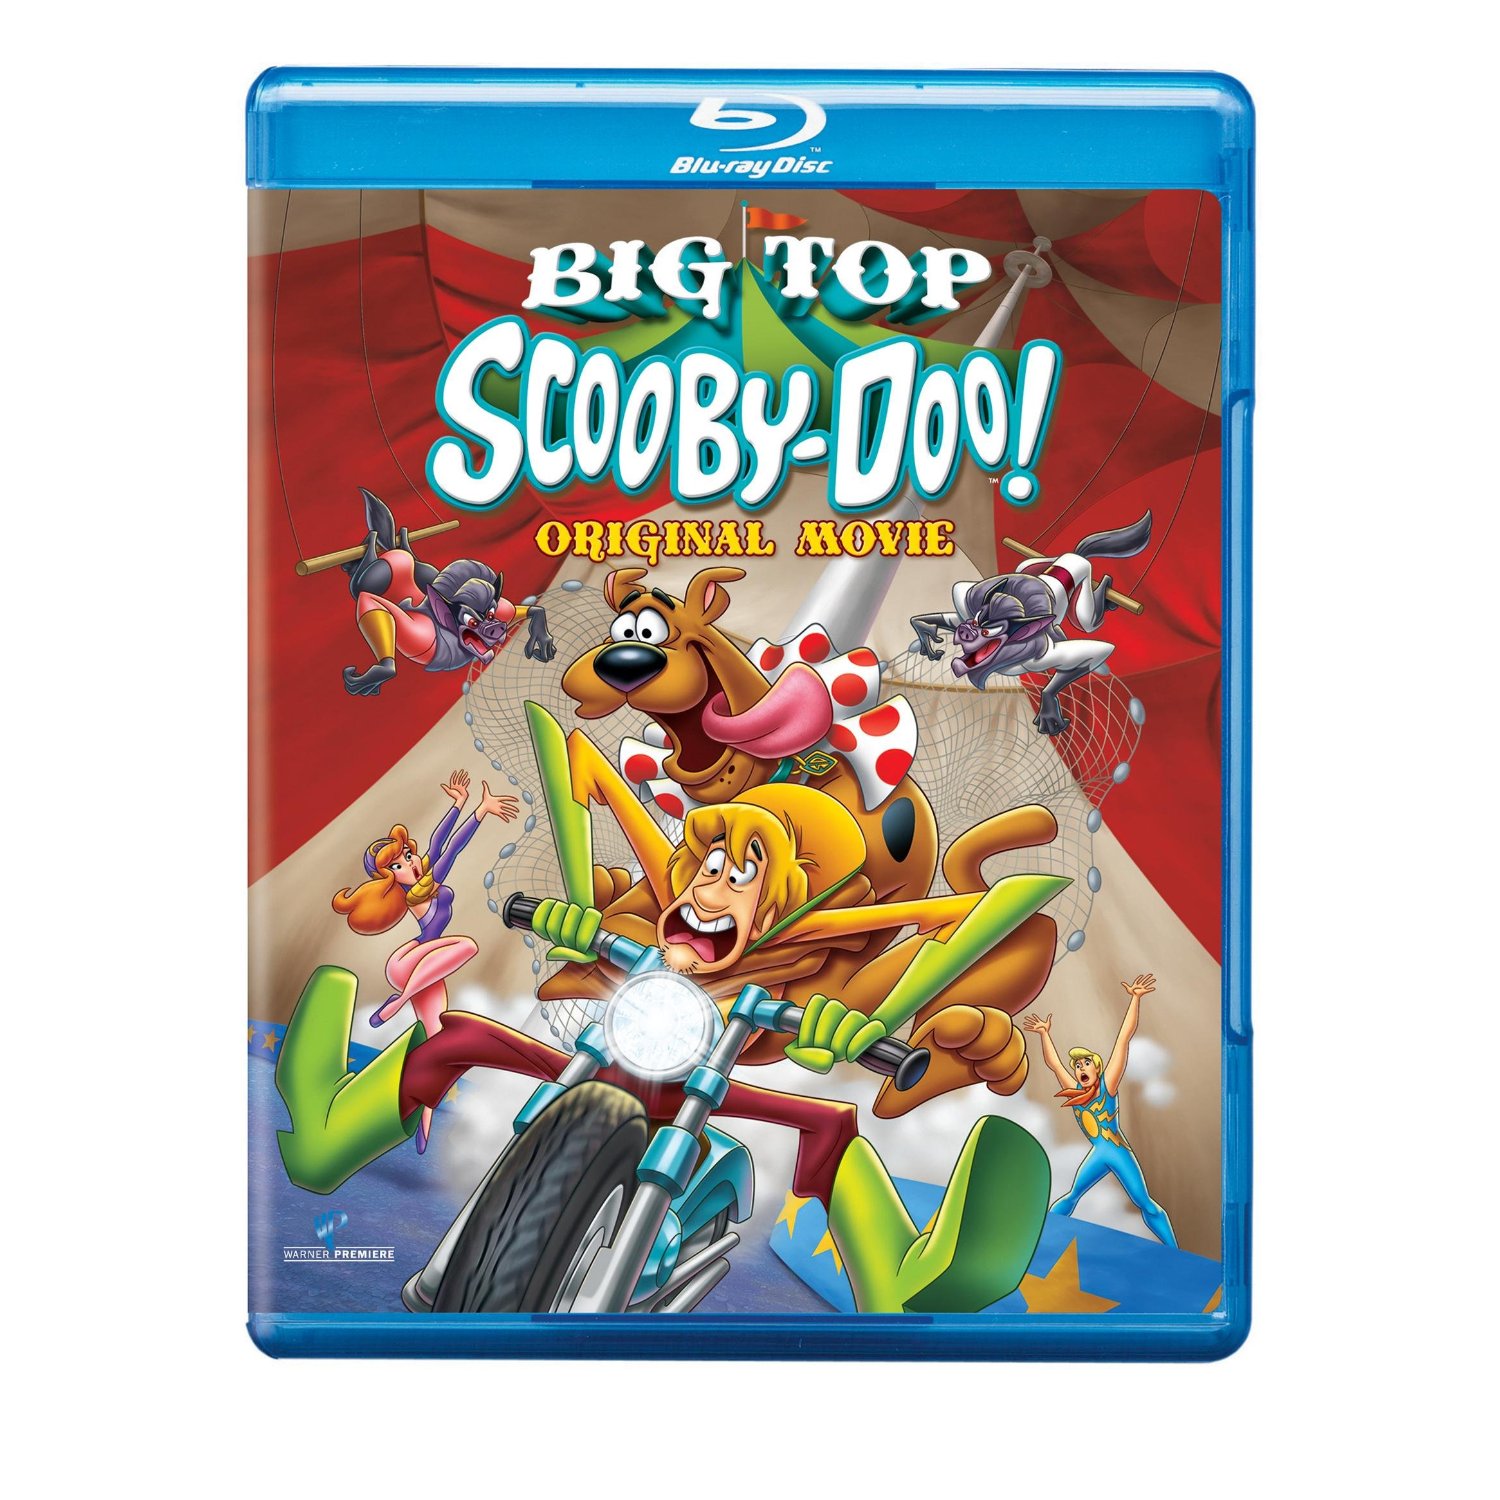 Big Top Scooby-Doo Movie Review!